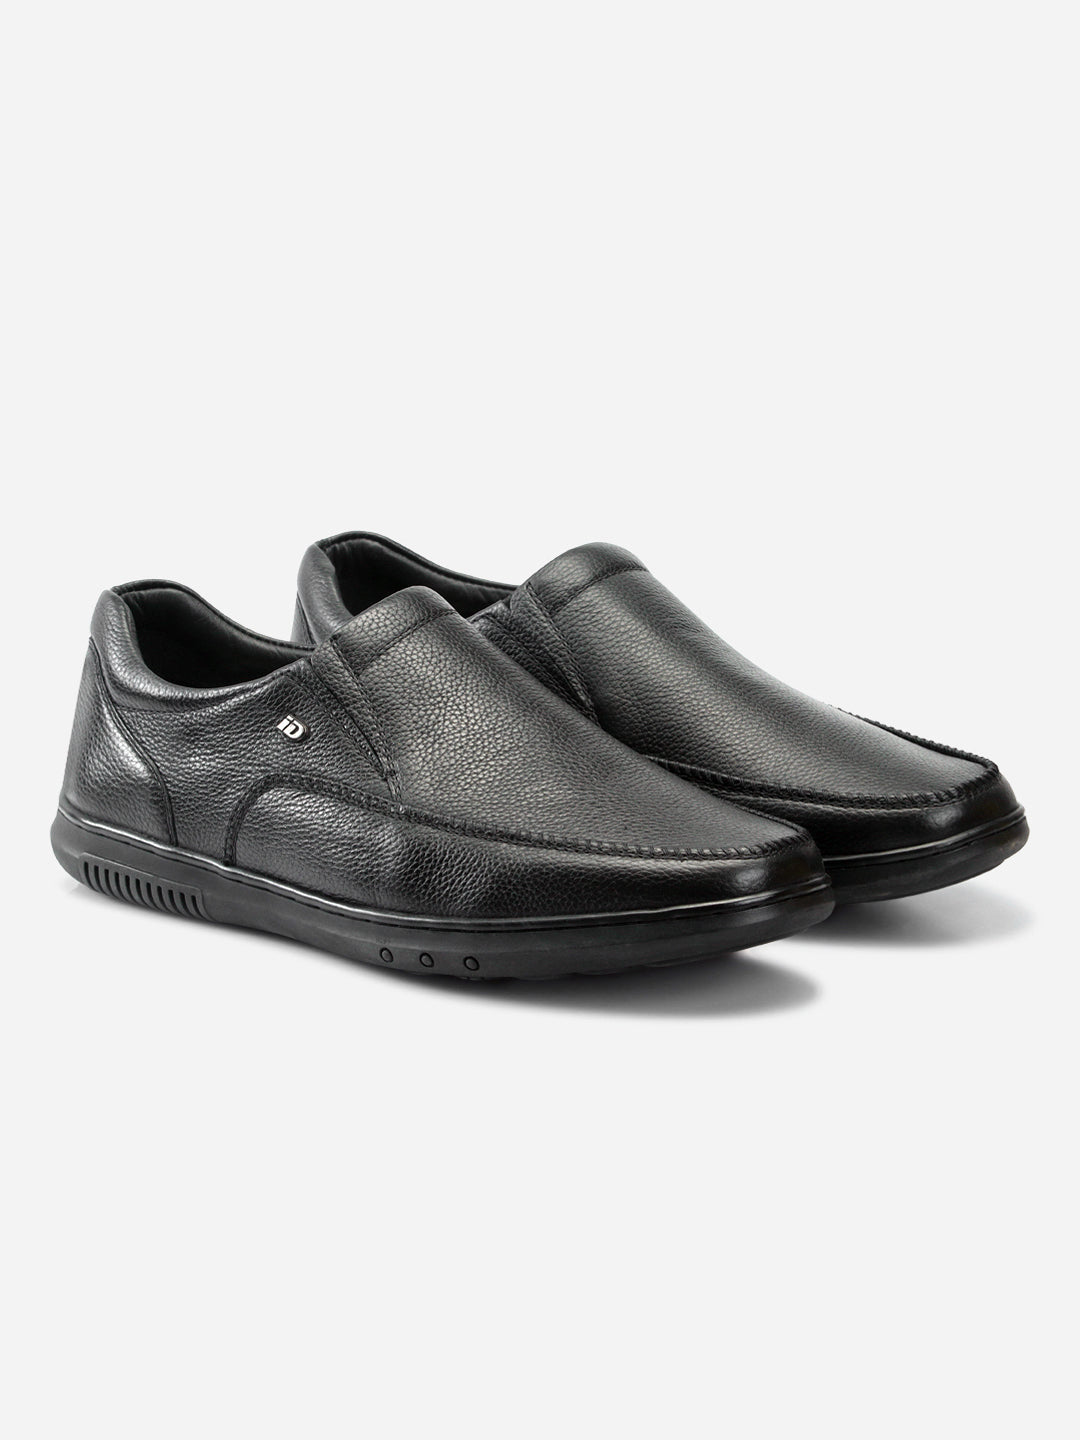 Buy Men's Black Regular Moc Toe Slip On Semi Formal (ID2149) Online